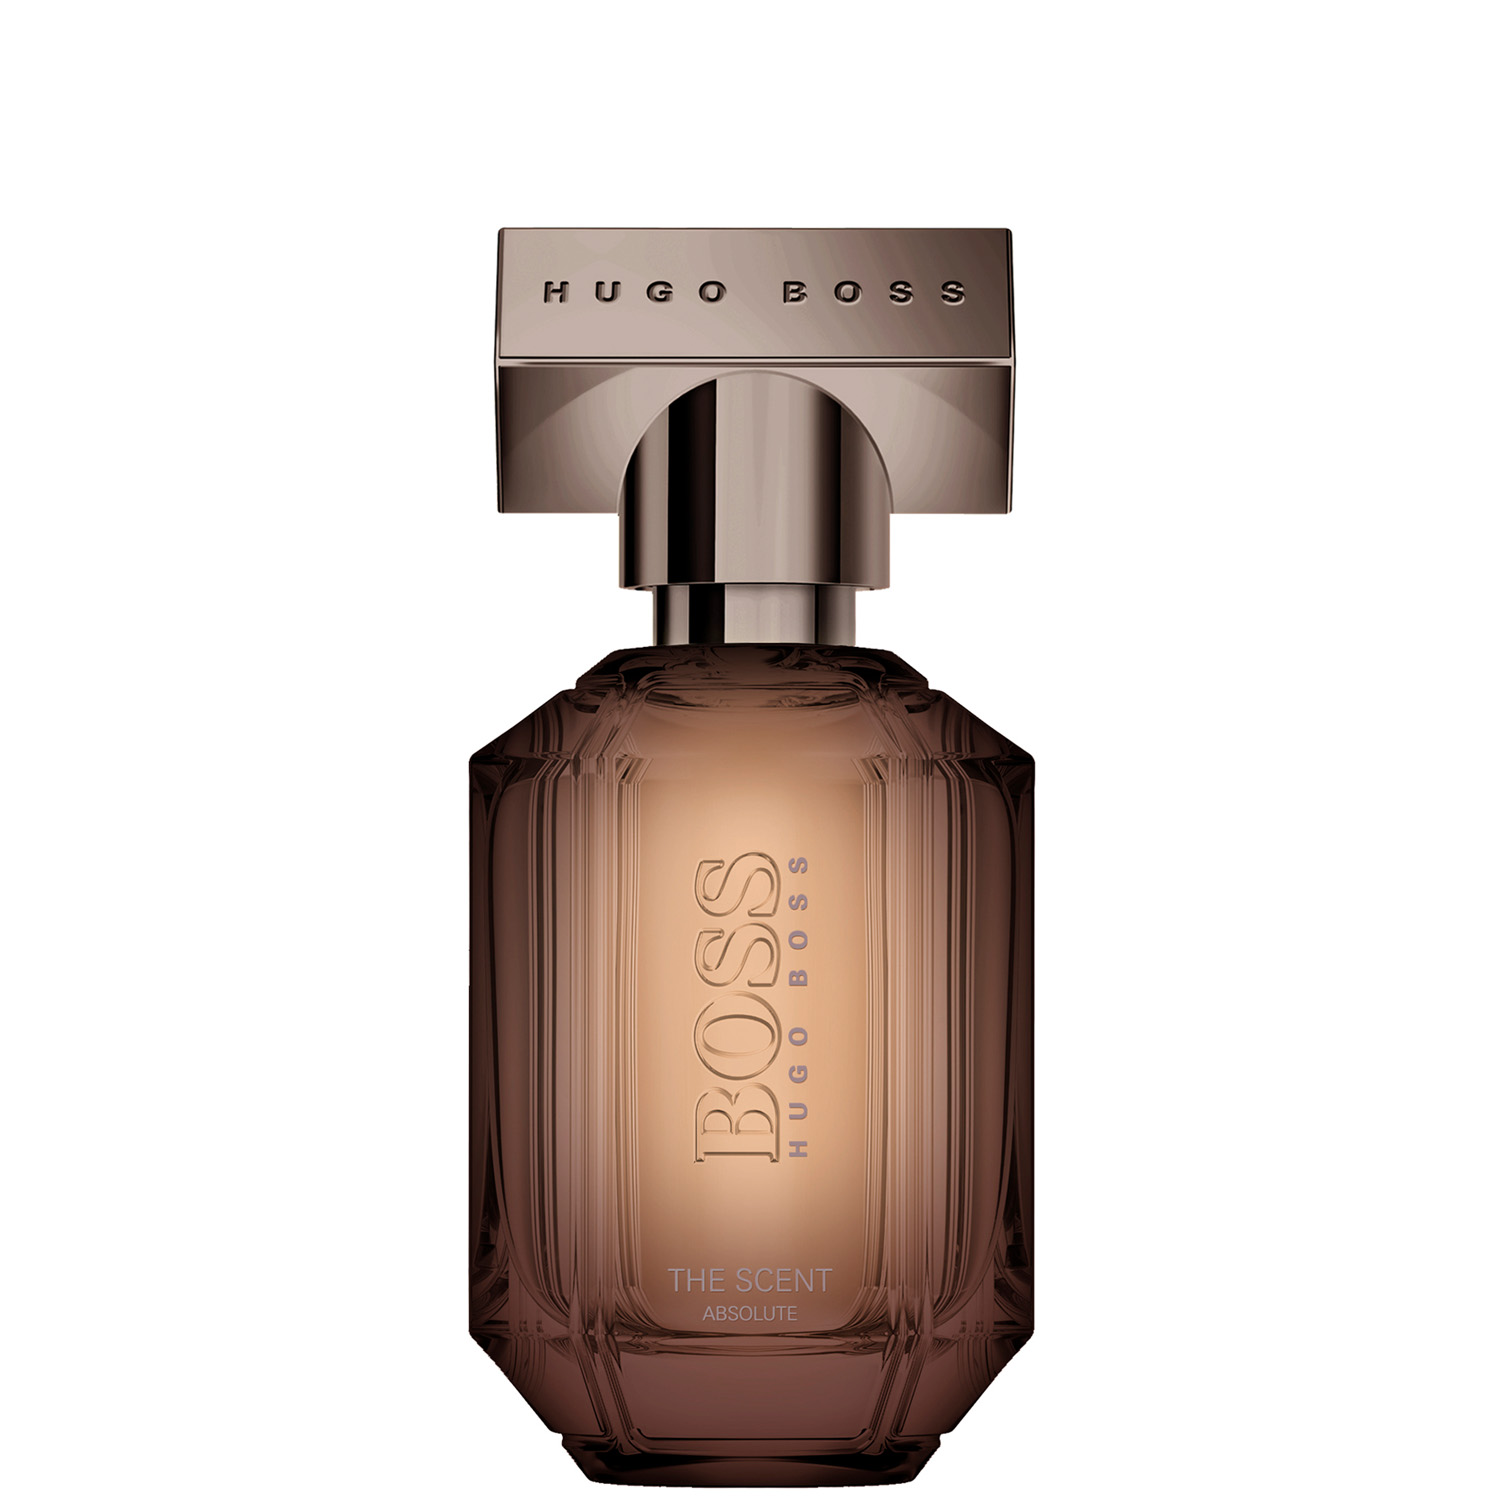 Hugo Boss The Scent Absolute for Her Eau de Parfum